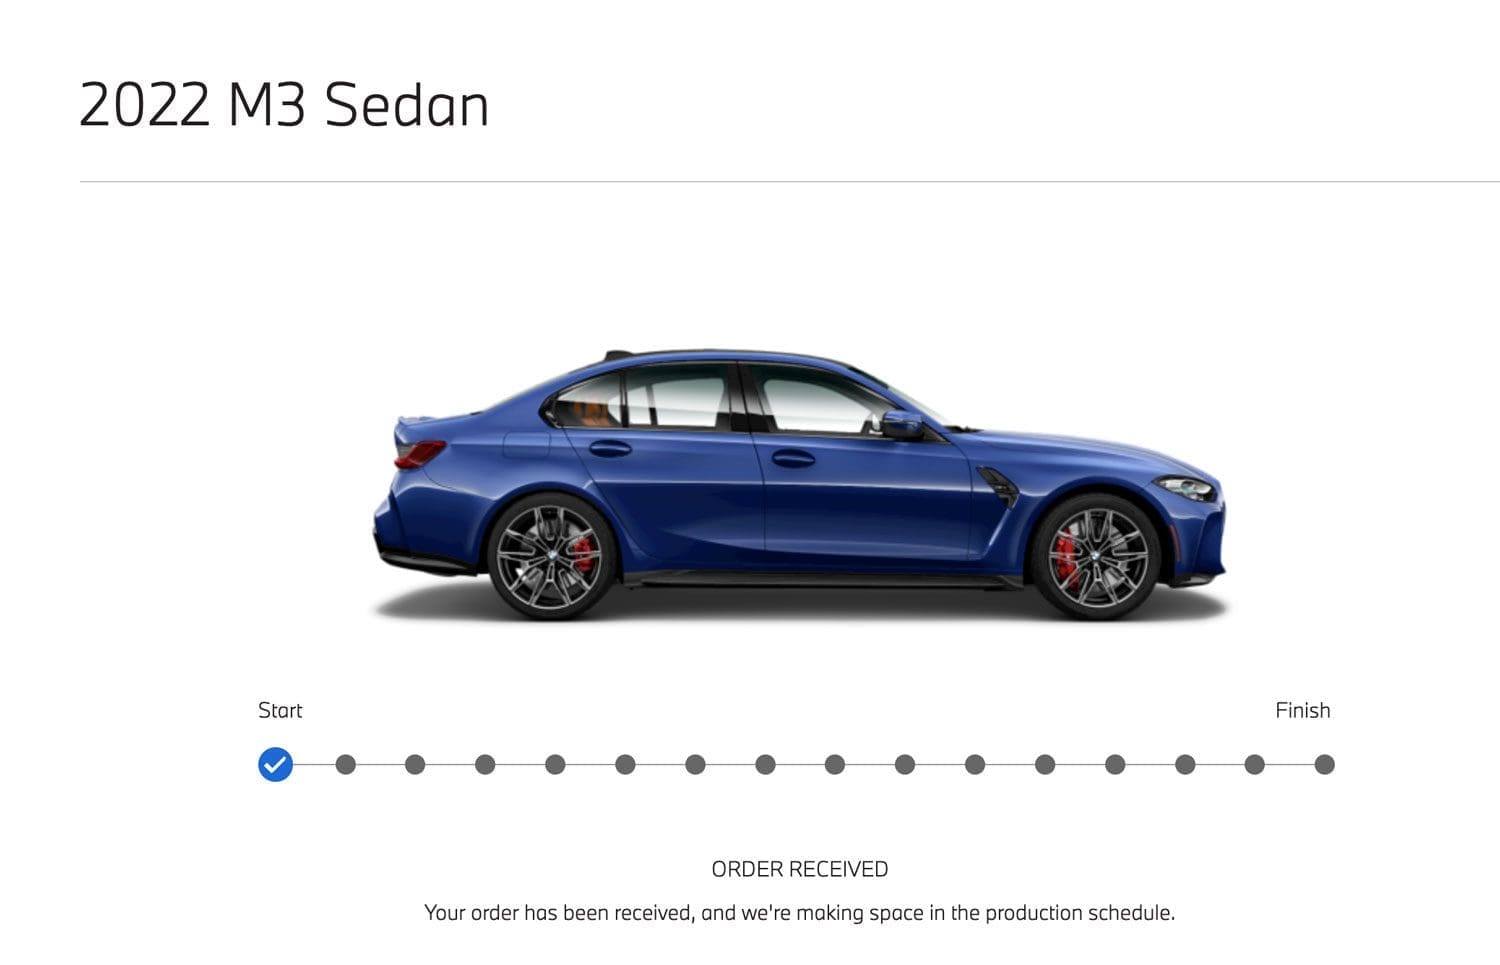 BMW M3 order